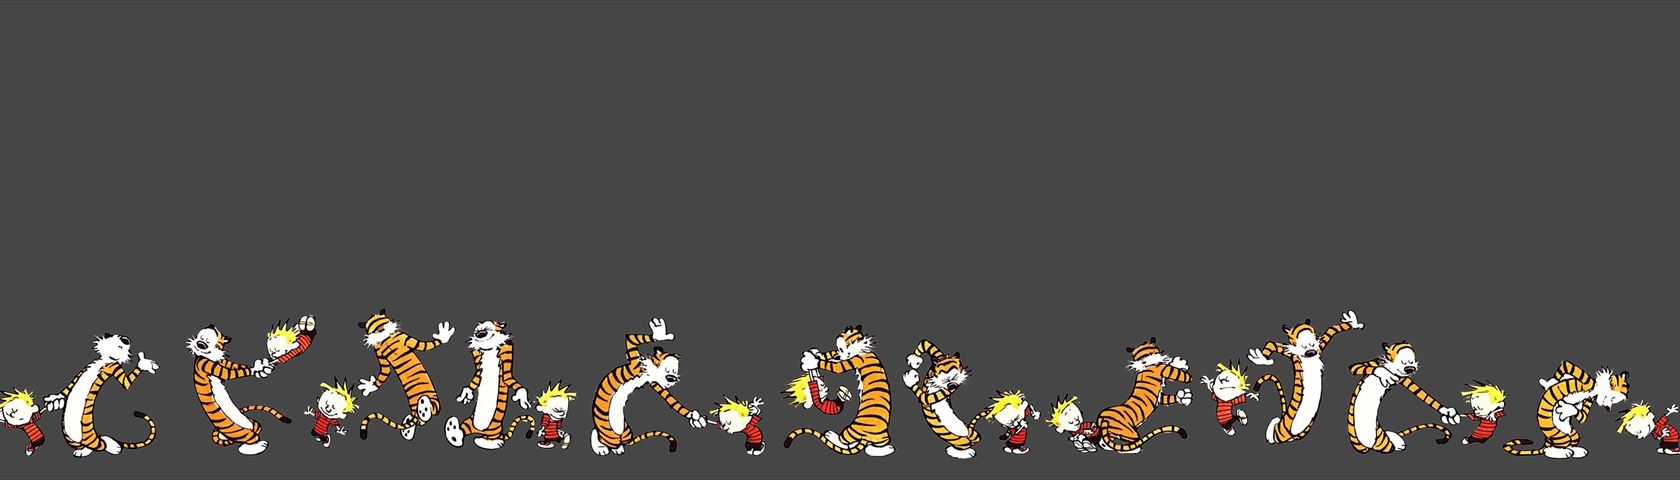 Calvin and Hobbes Dance